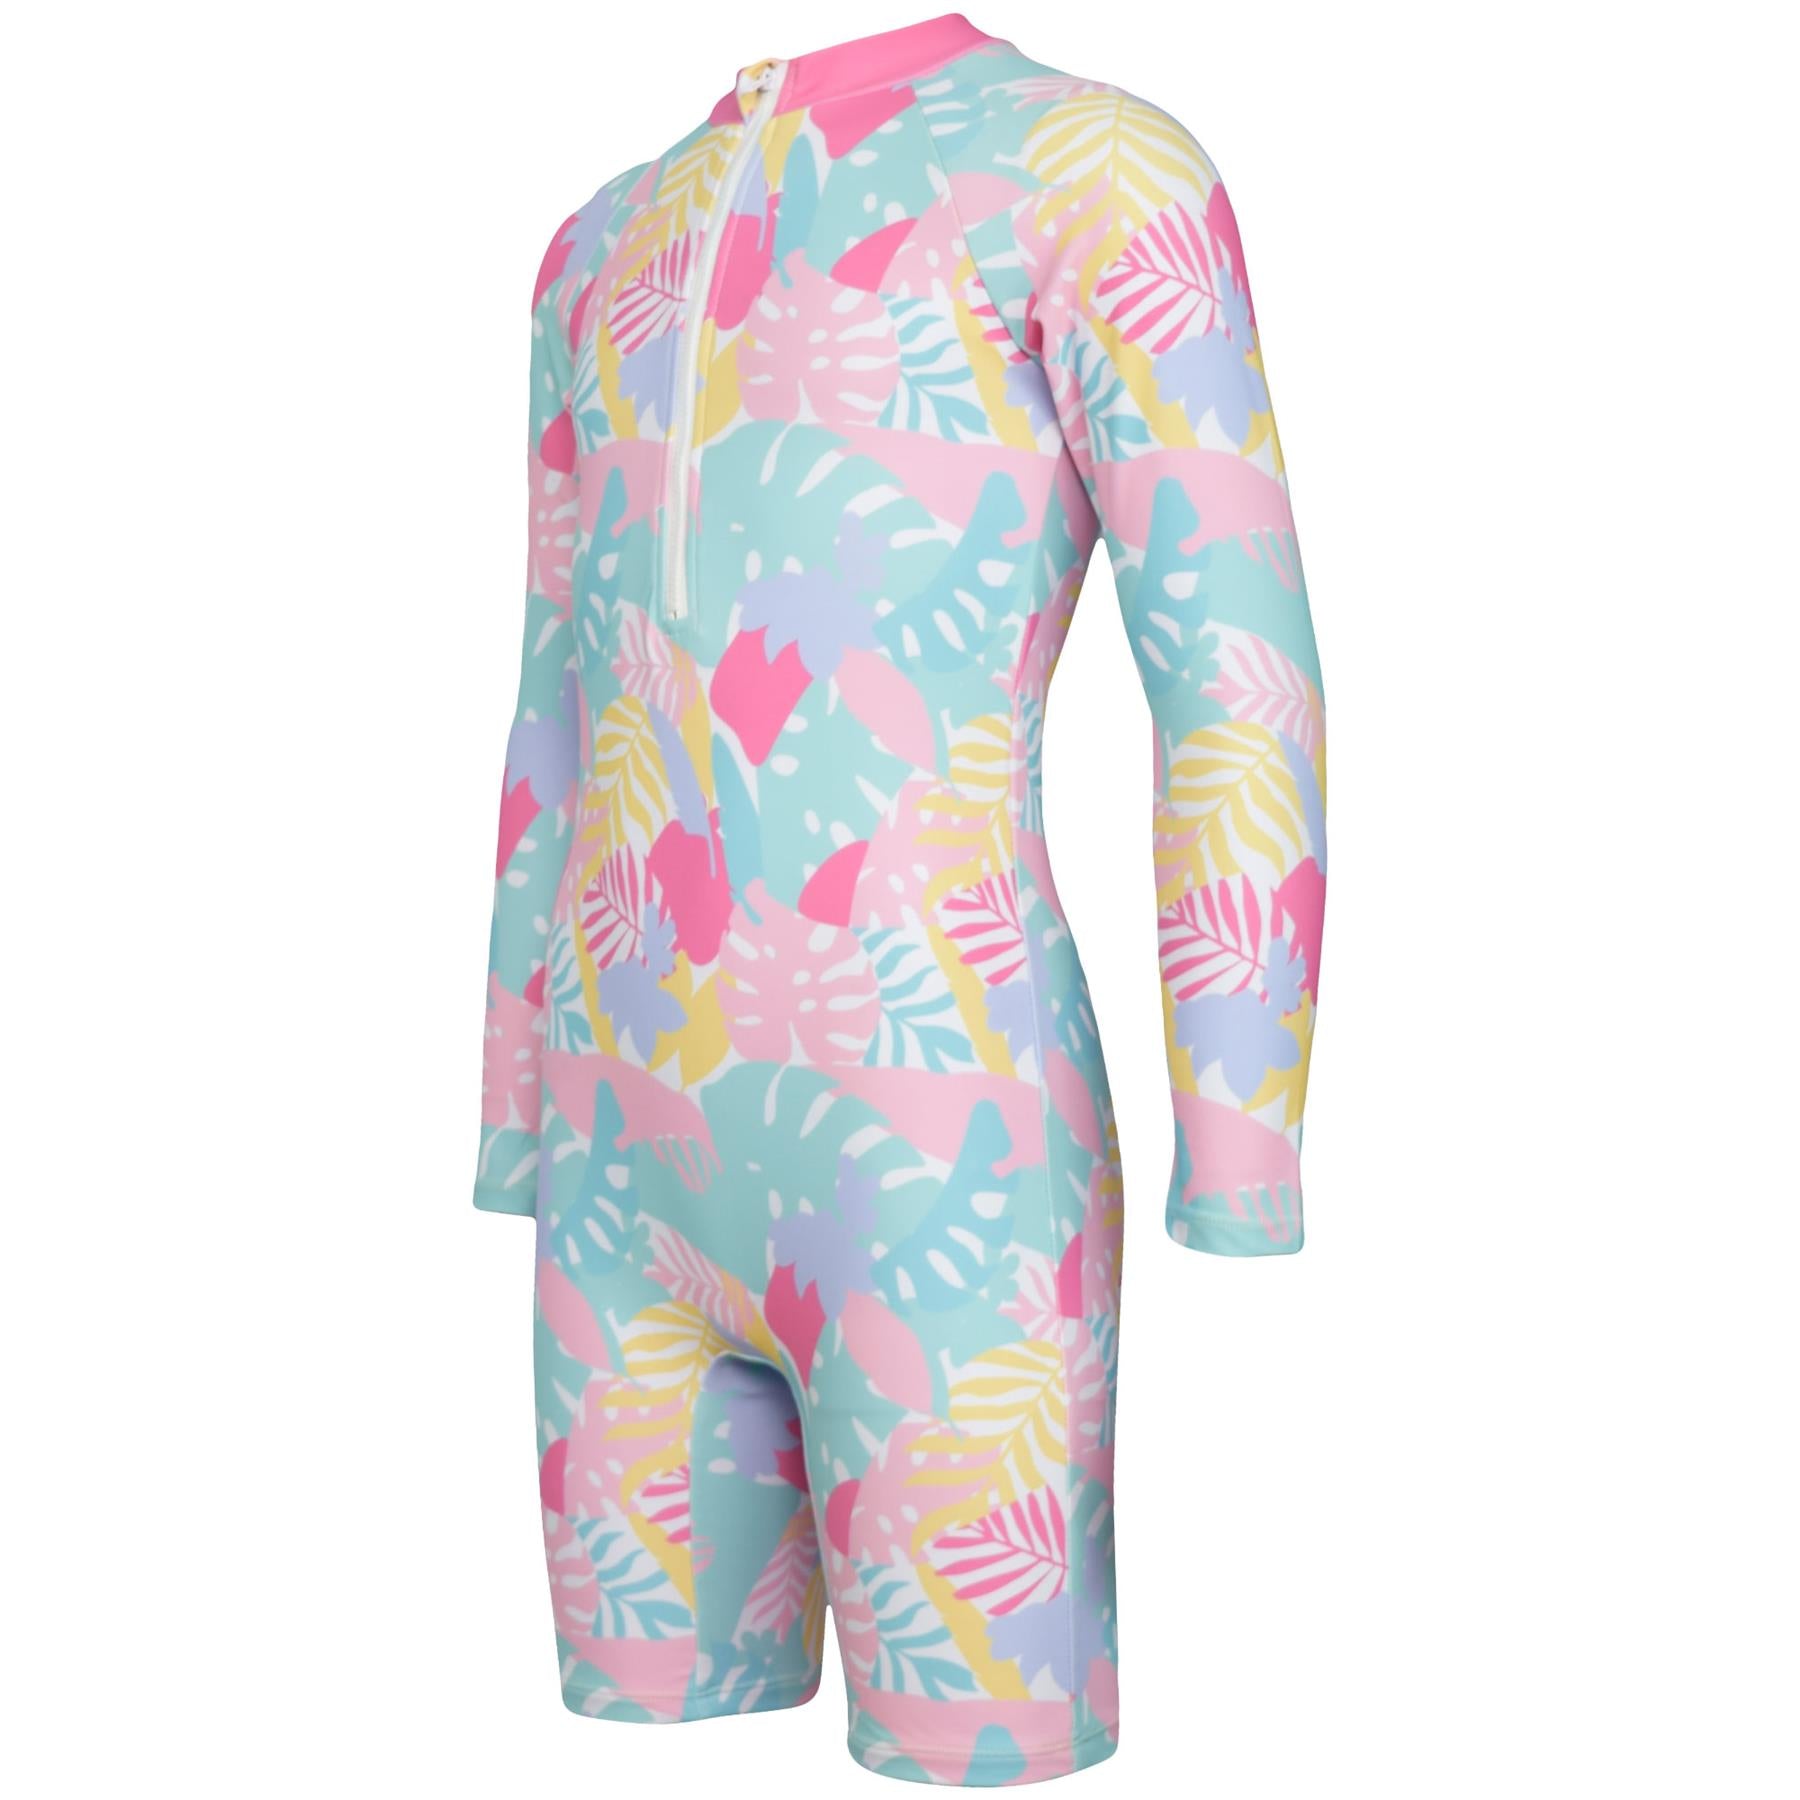 A2Z 4 Kids Girls One Piece Wetsuit UPF50+UV Surfing Swimming Swimwear Costume